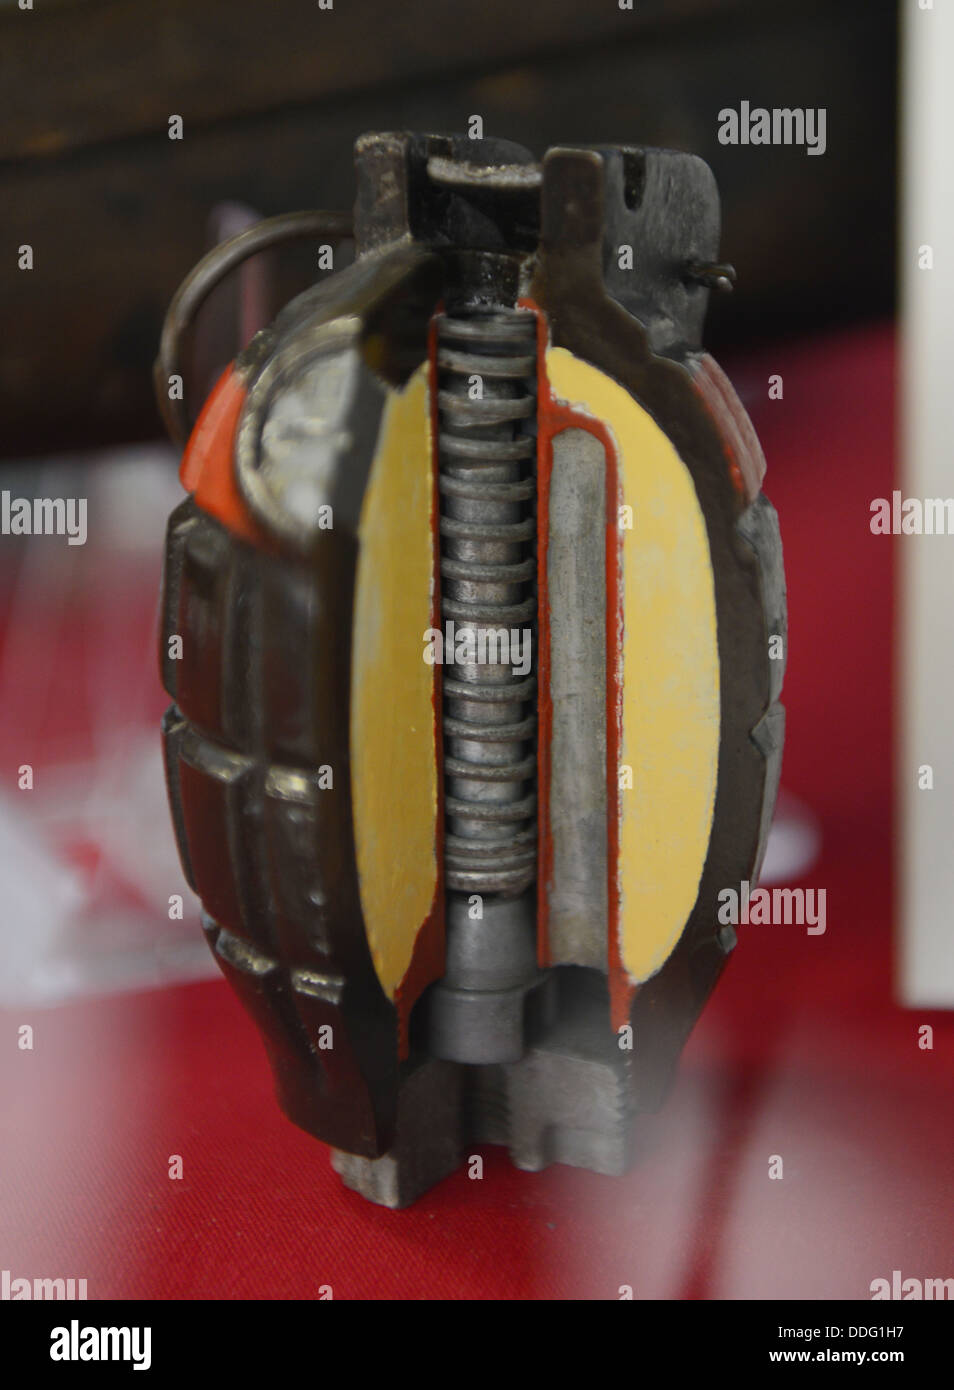 Hand grenade, Mills Bomb hand grenade, cut away showing the inner workings of the grenade Stock Photo